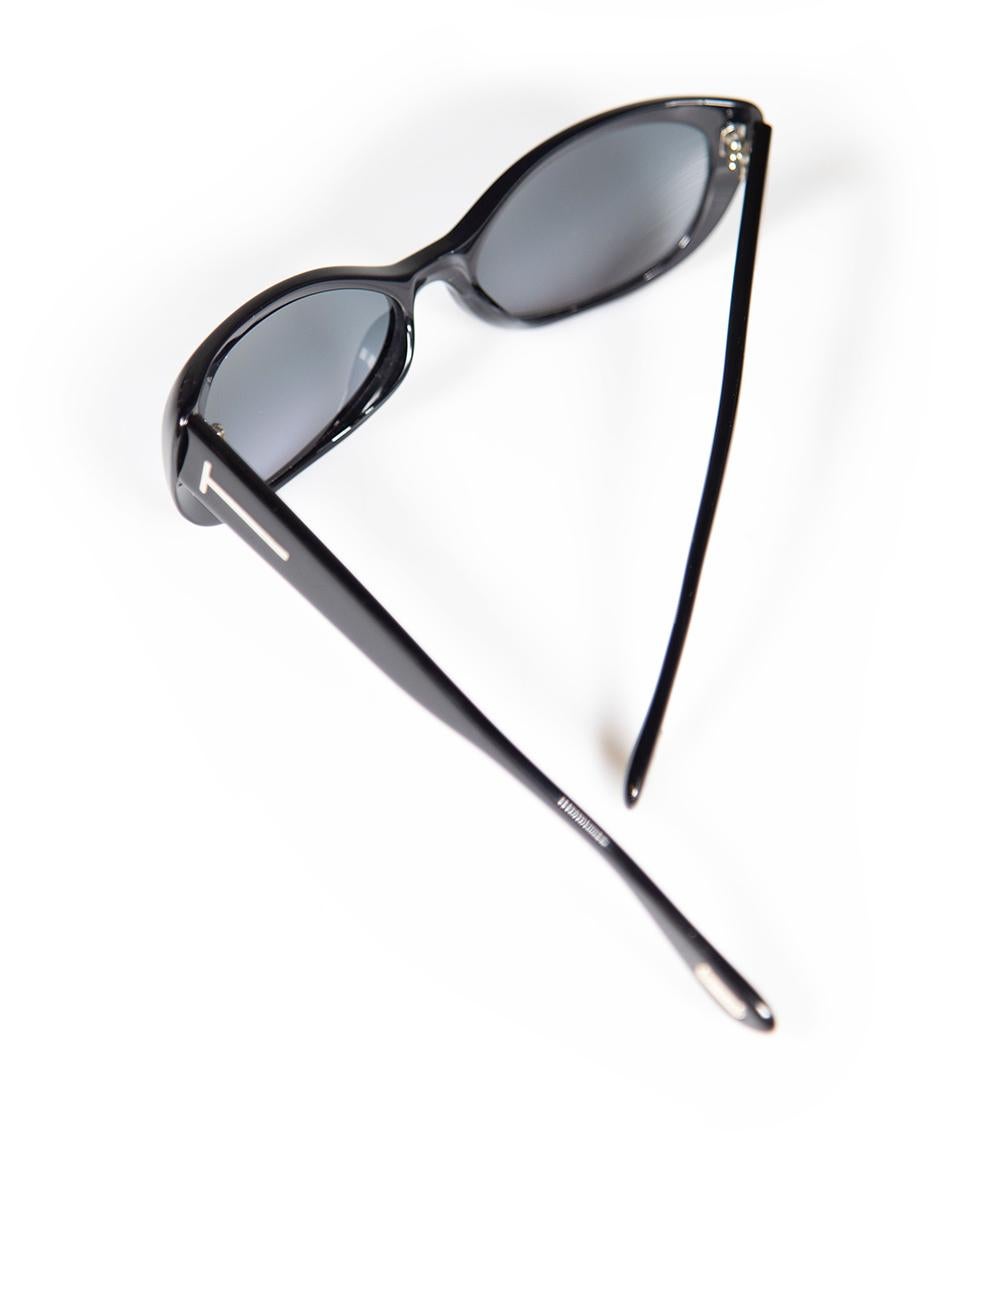 Tom Ford Shiny Black Sebastian Sunglasses For Sale 3